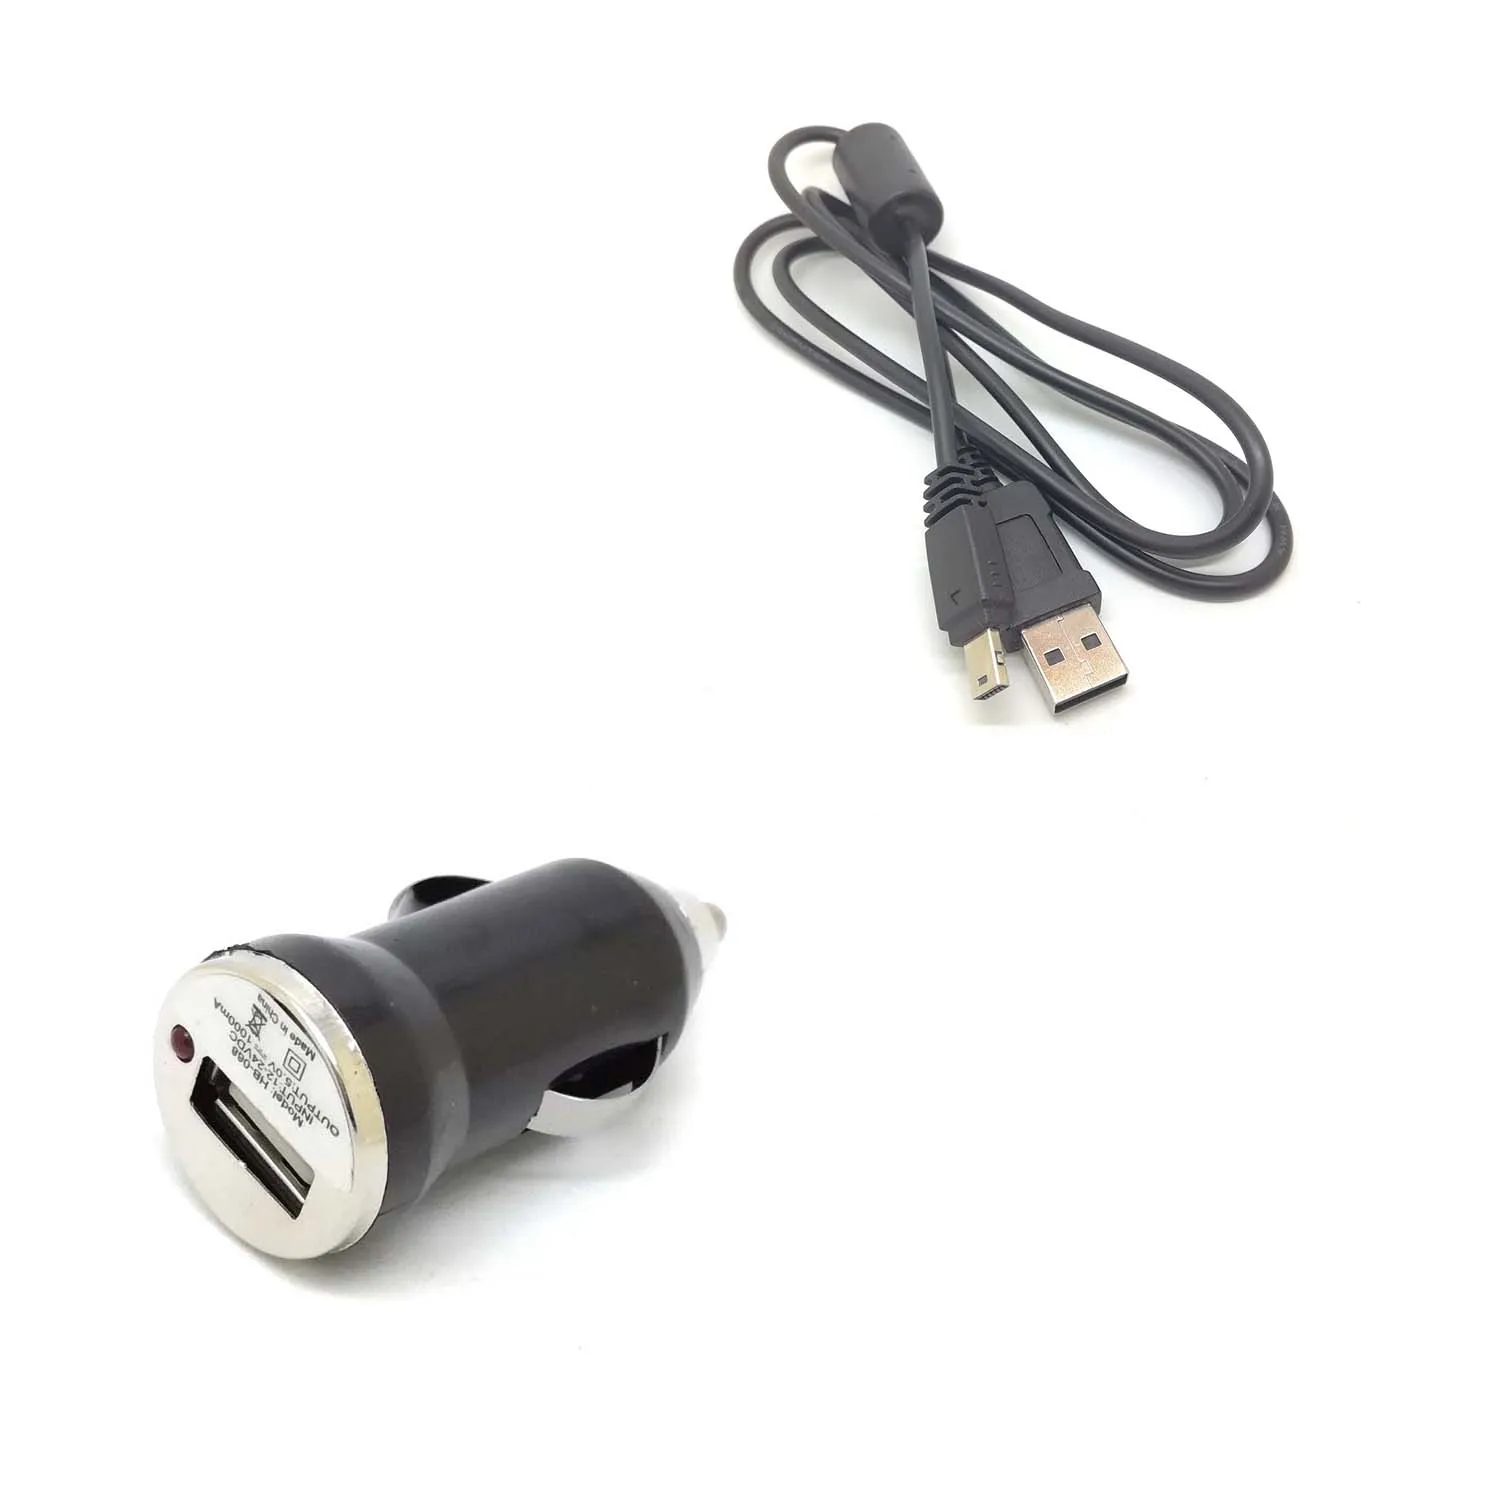 WALL USB Charger& Cable For Casio Exilim EX-ZR20 ZR200 Z3000 ZR300 ZR1000 ZR1500 EX-TR100 TR150 TR200 ZR15